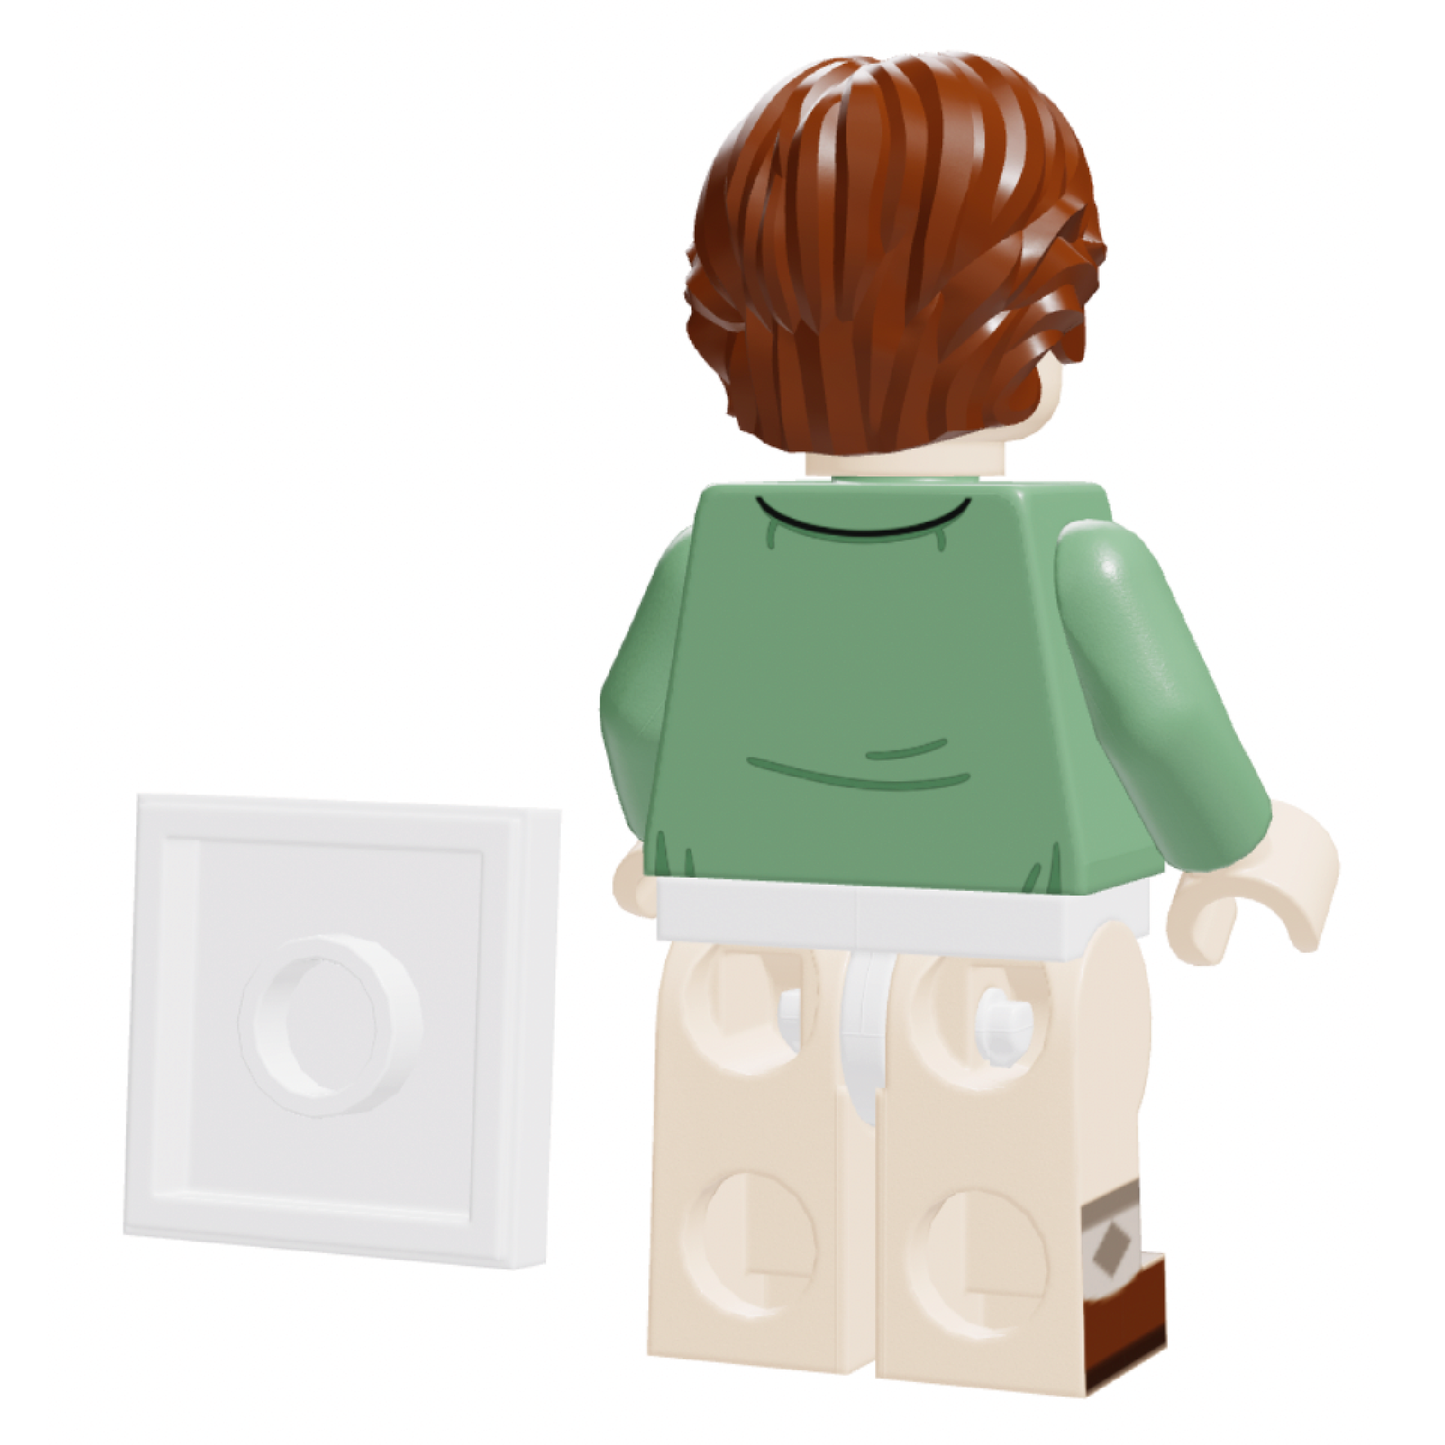 Walter White Minifigure - Design by LegoRepublic